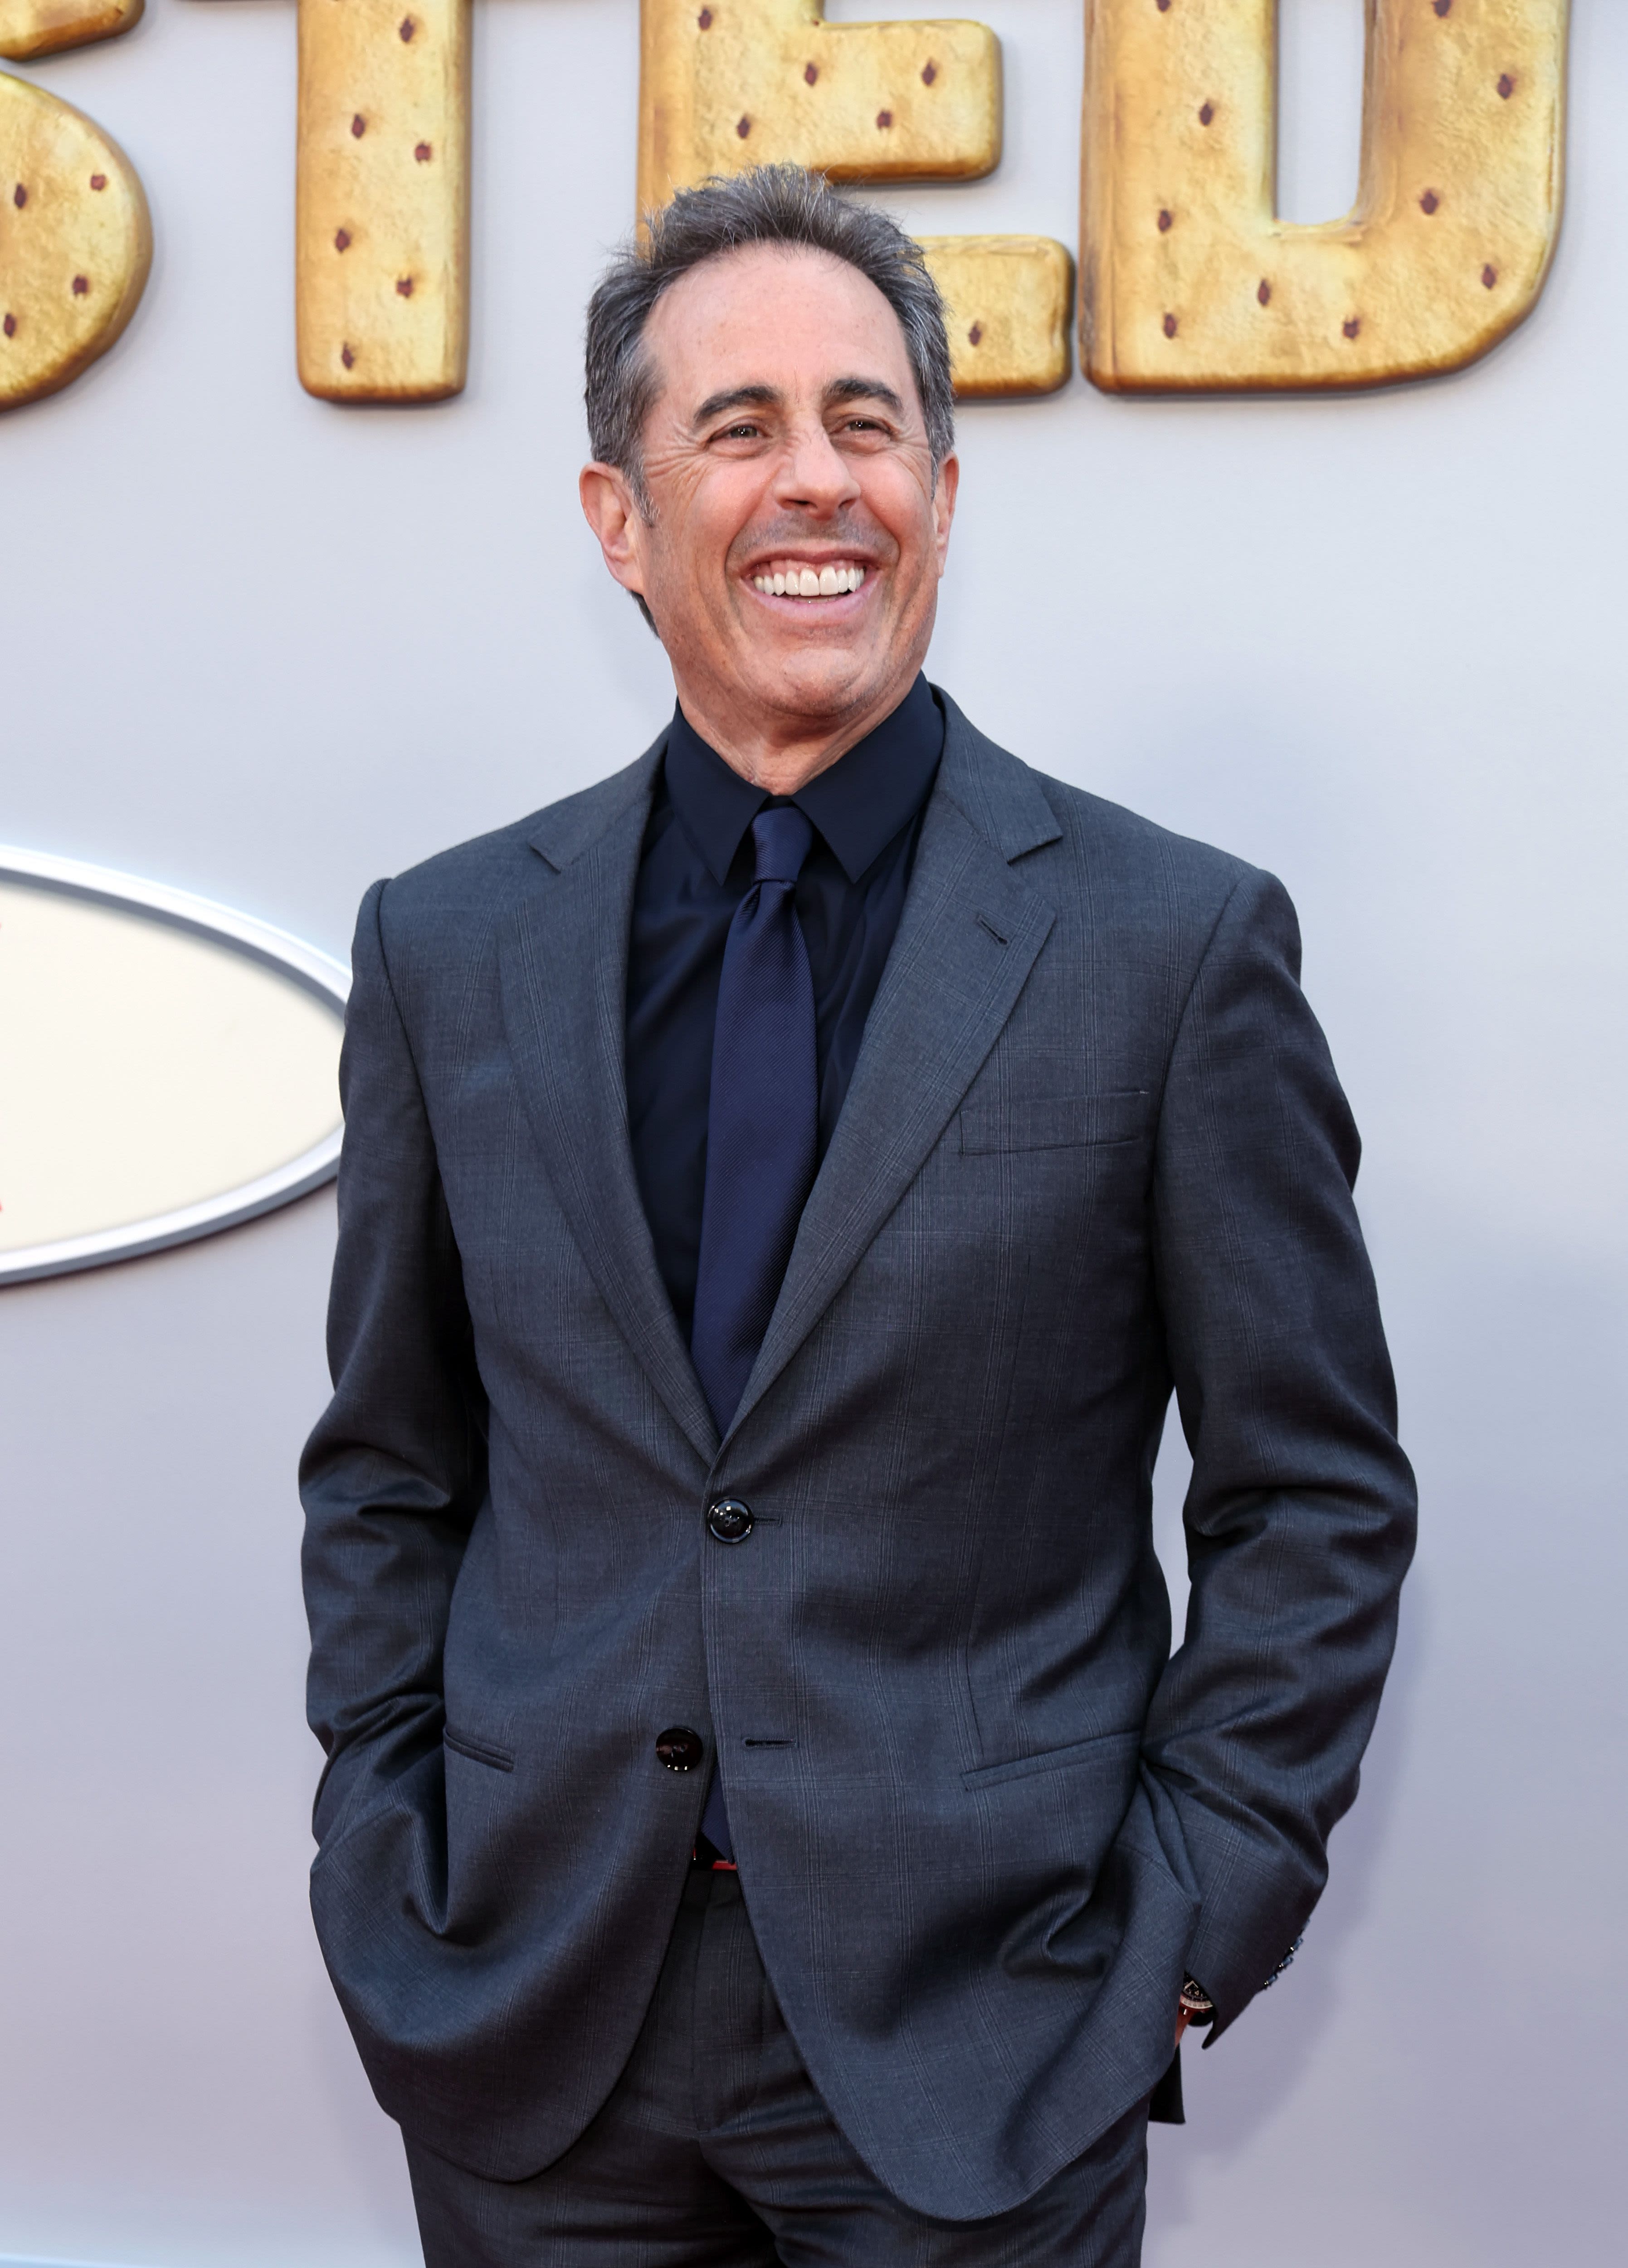 Jerry Seinfeld Kicks Off Netflix is a Joke Festival With Star-Studded Hollywood Bowl Show